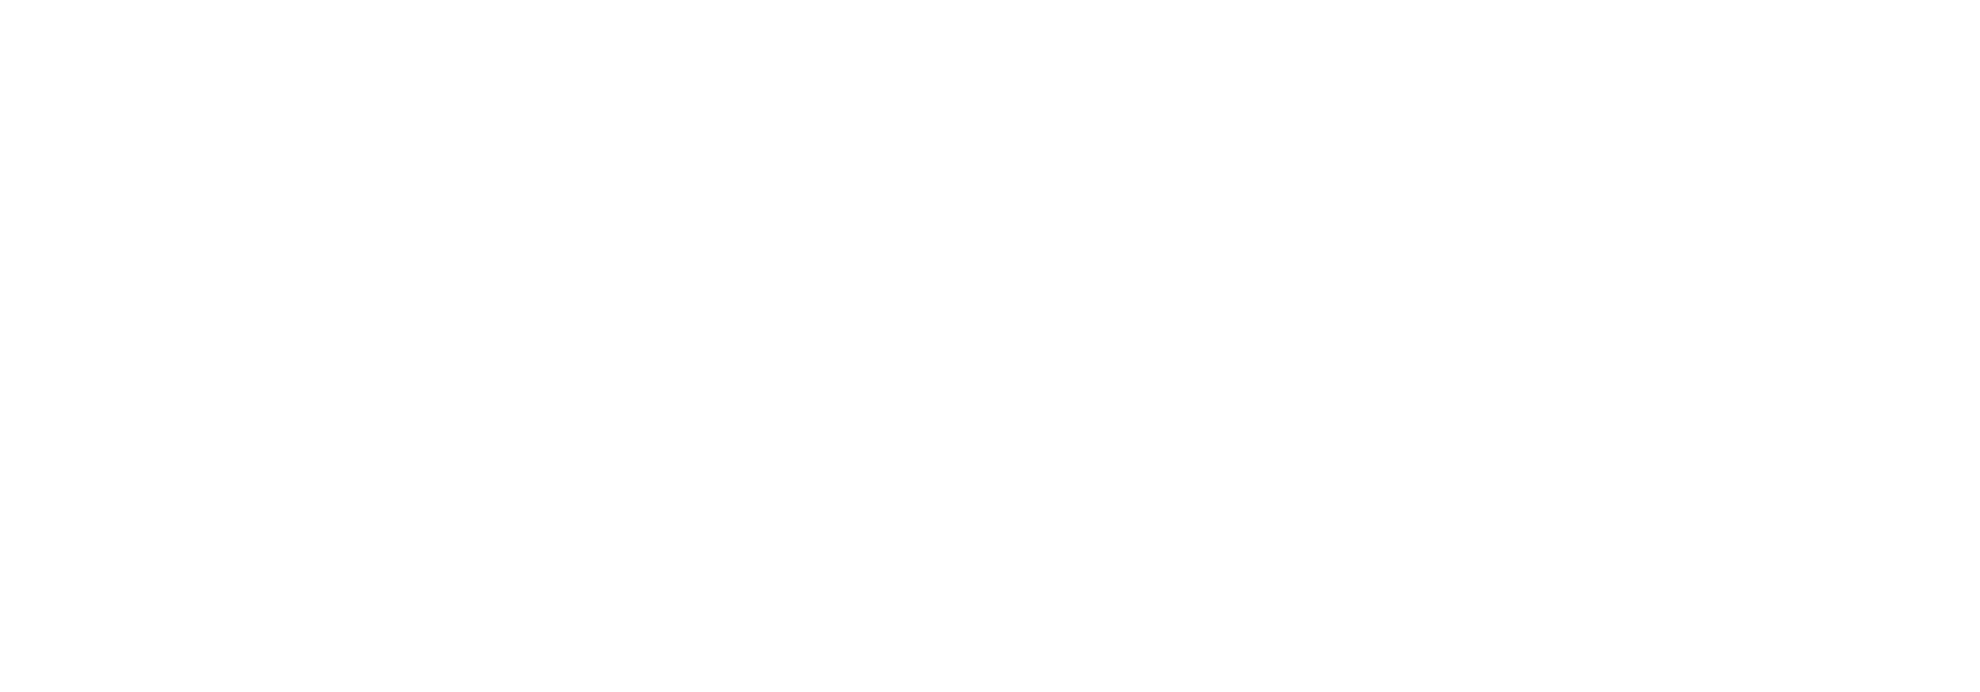 10 Figure Development Logo